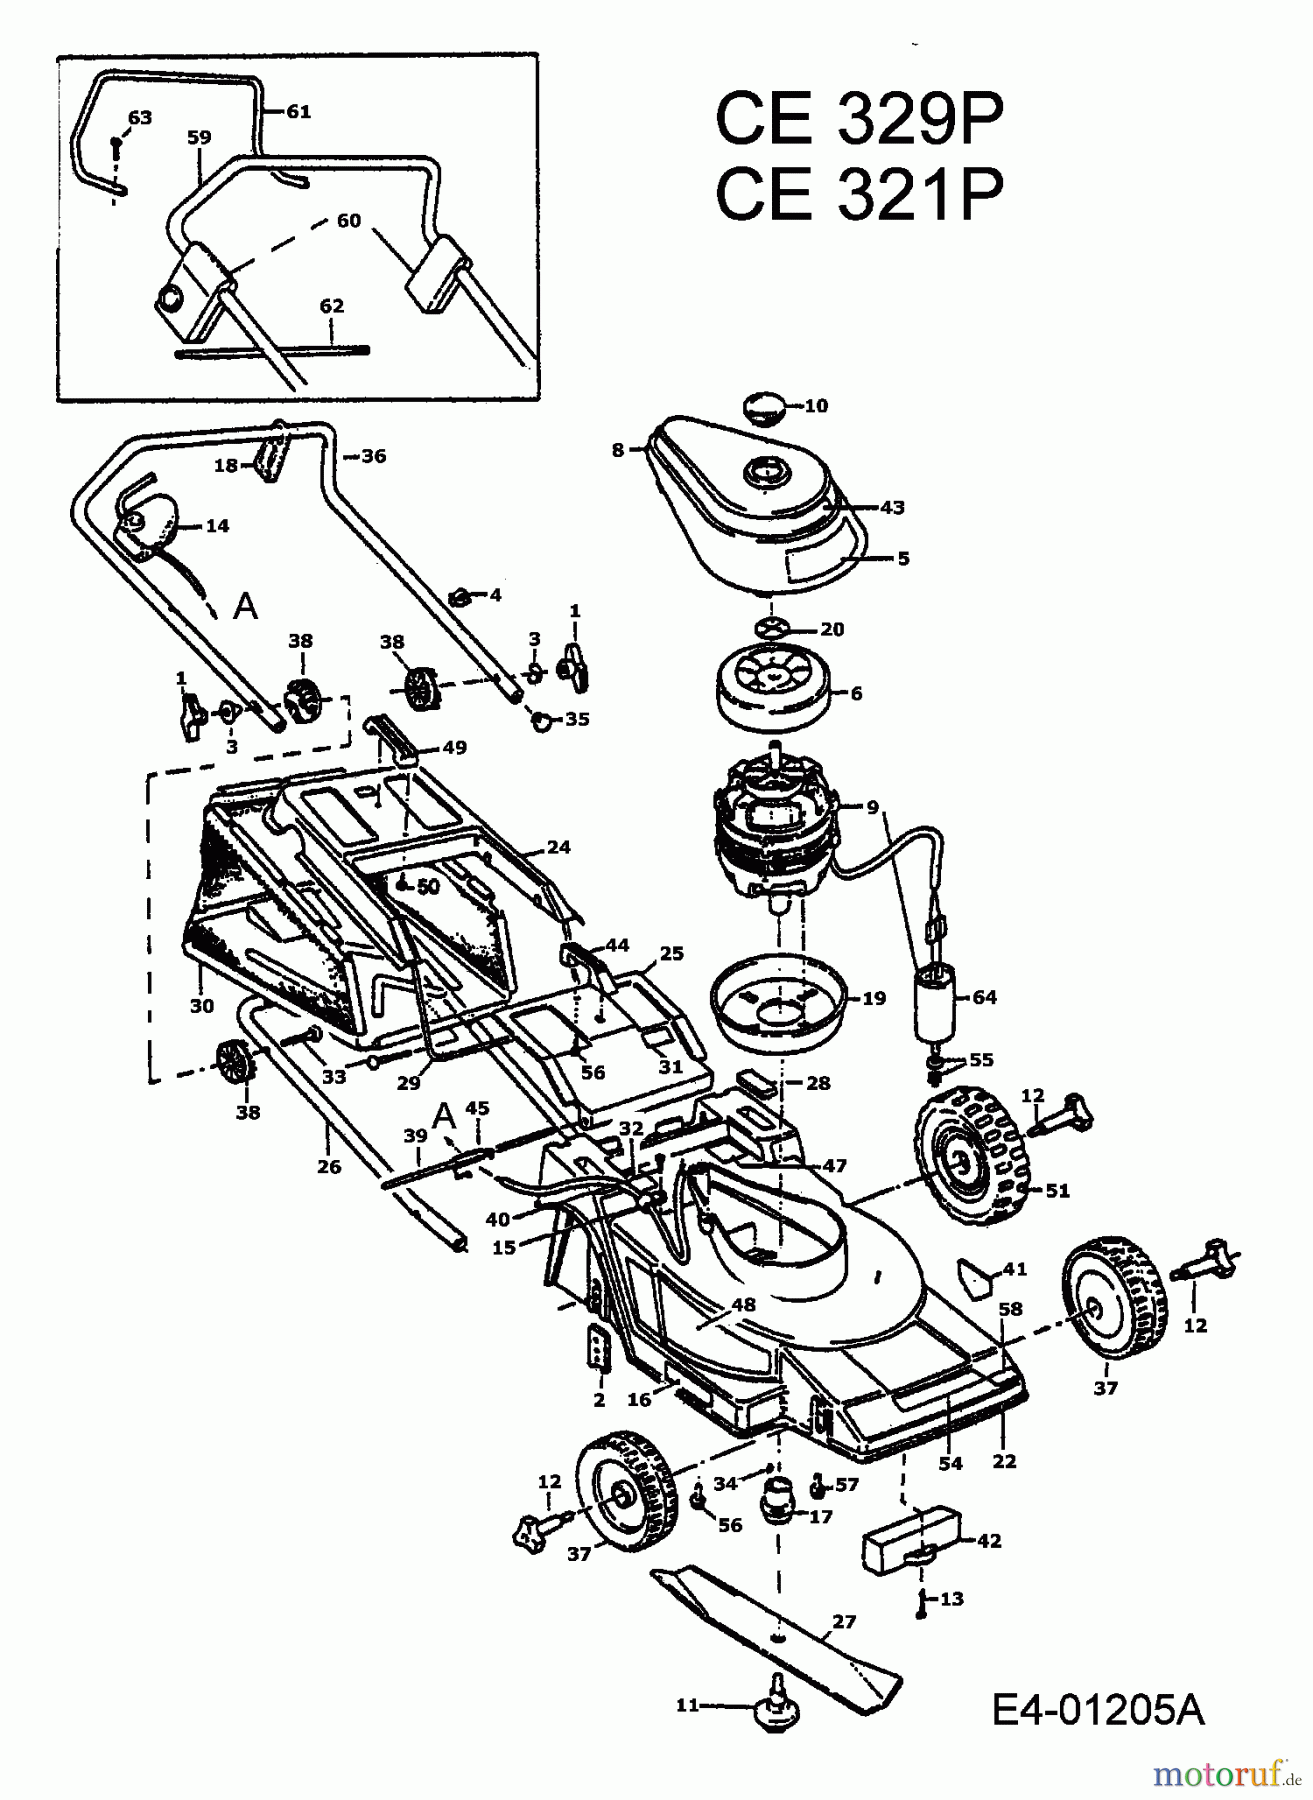  MTD Electric mower CE 321 P 901E323P001  (1994) Basic machine